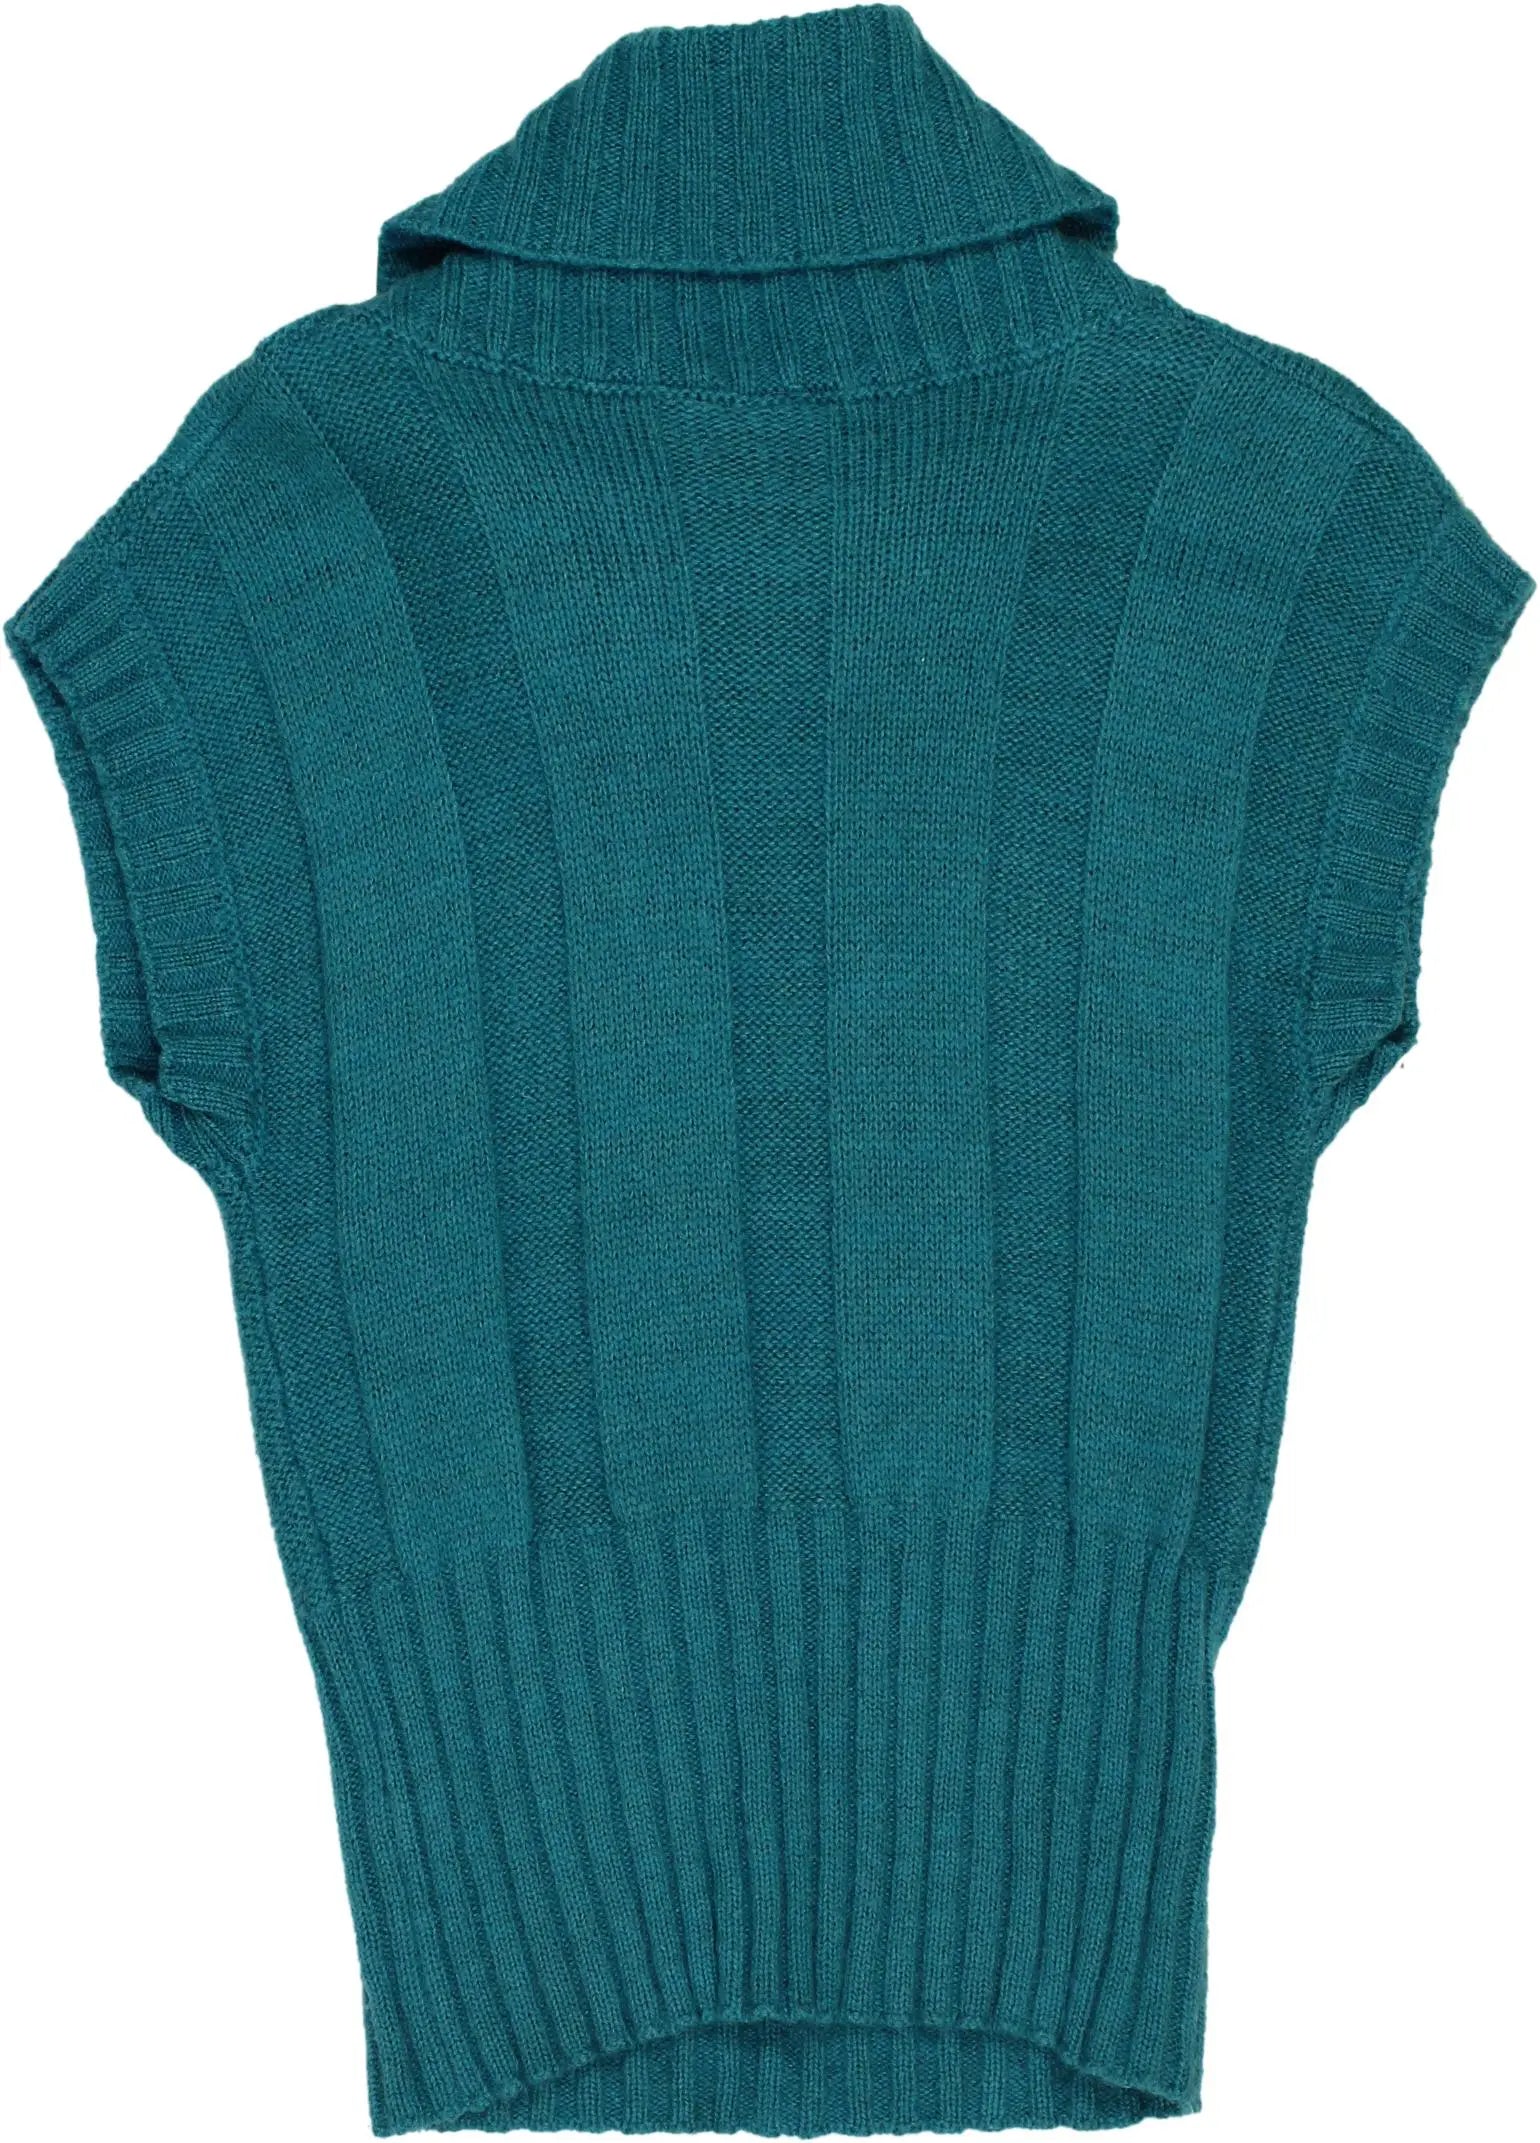 Stile Benetton - Short Sleeve Jumper- ThriftTale.com - Vintage and second handclothing